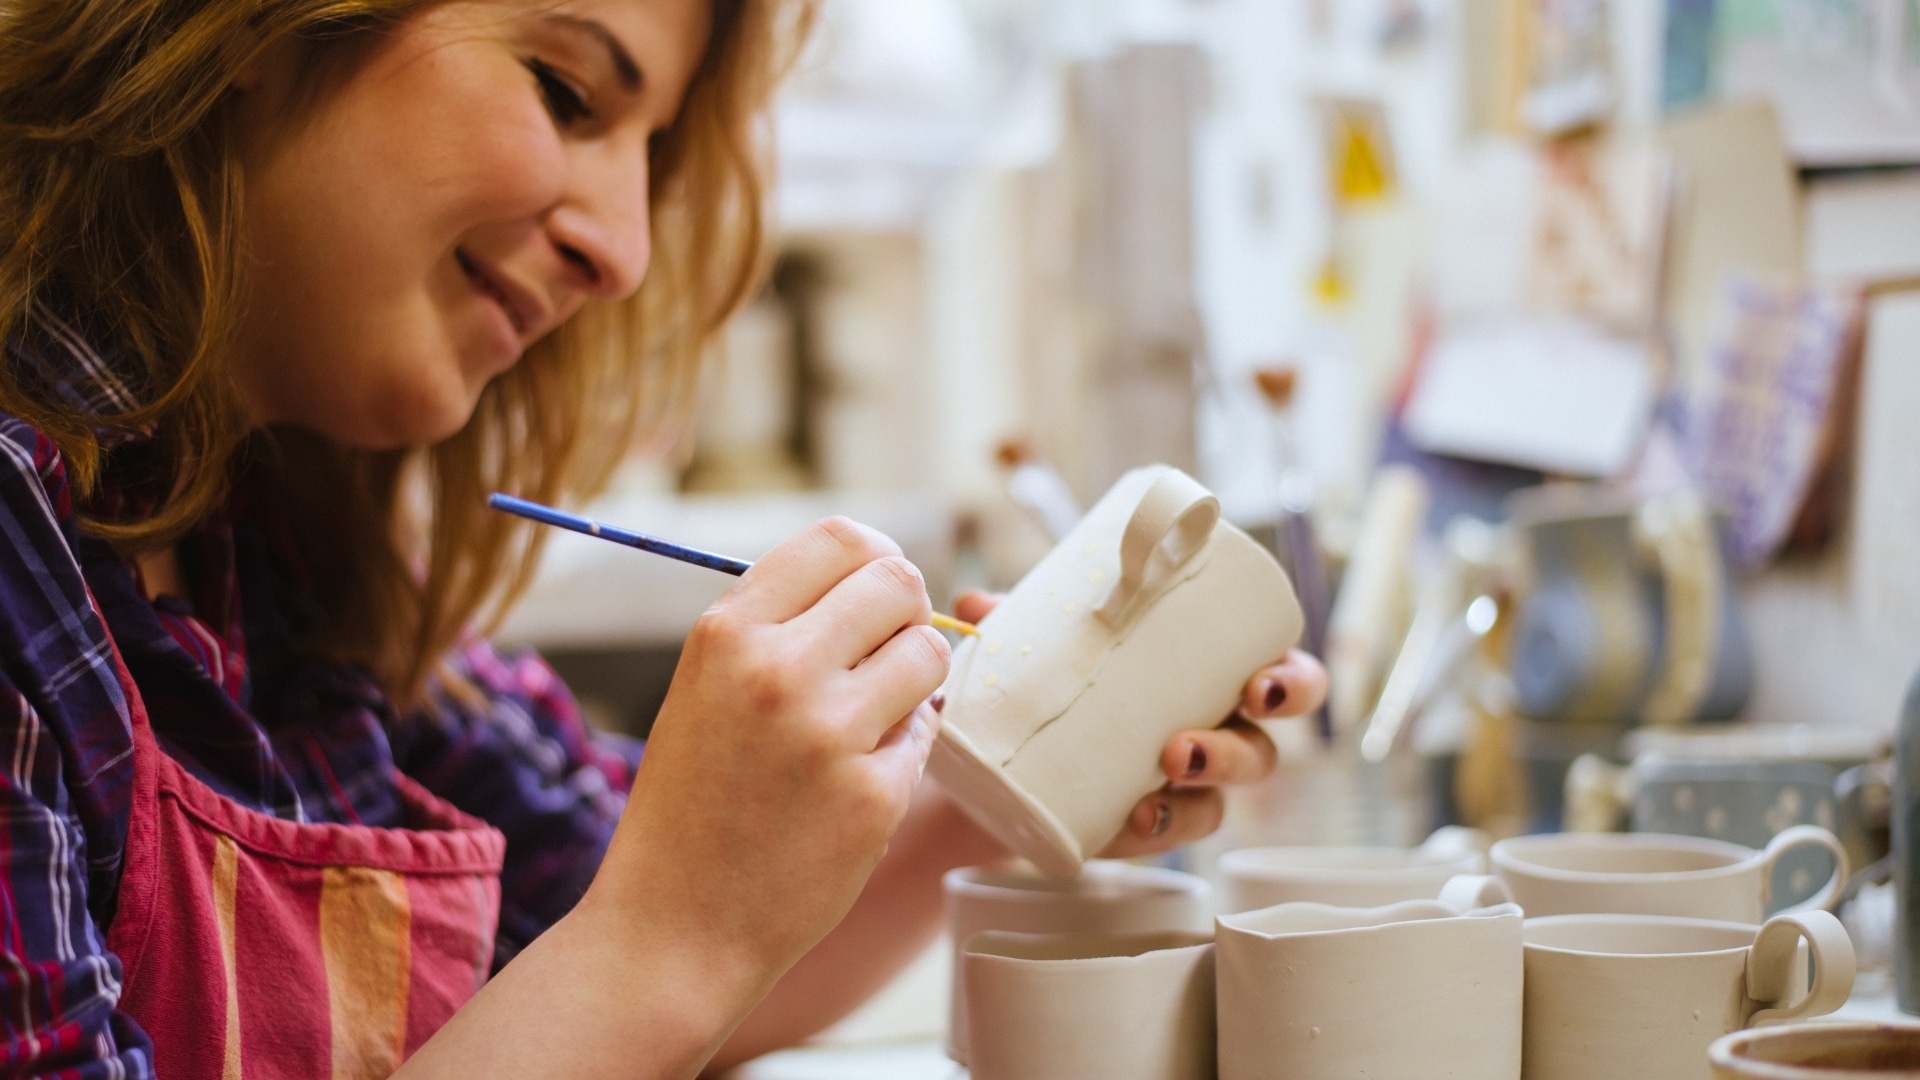 A smiling woman painting handmade mugs